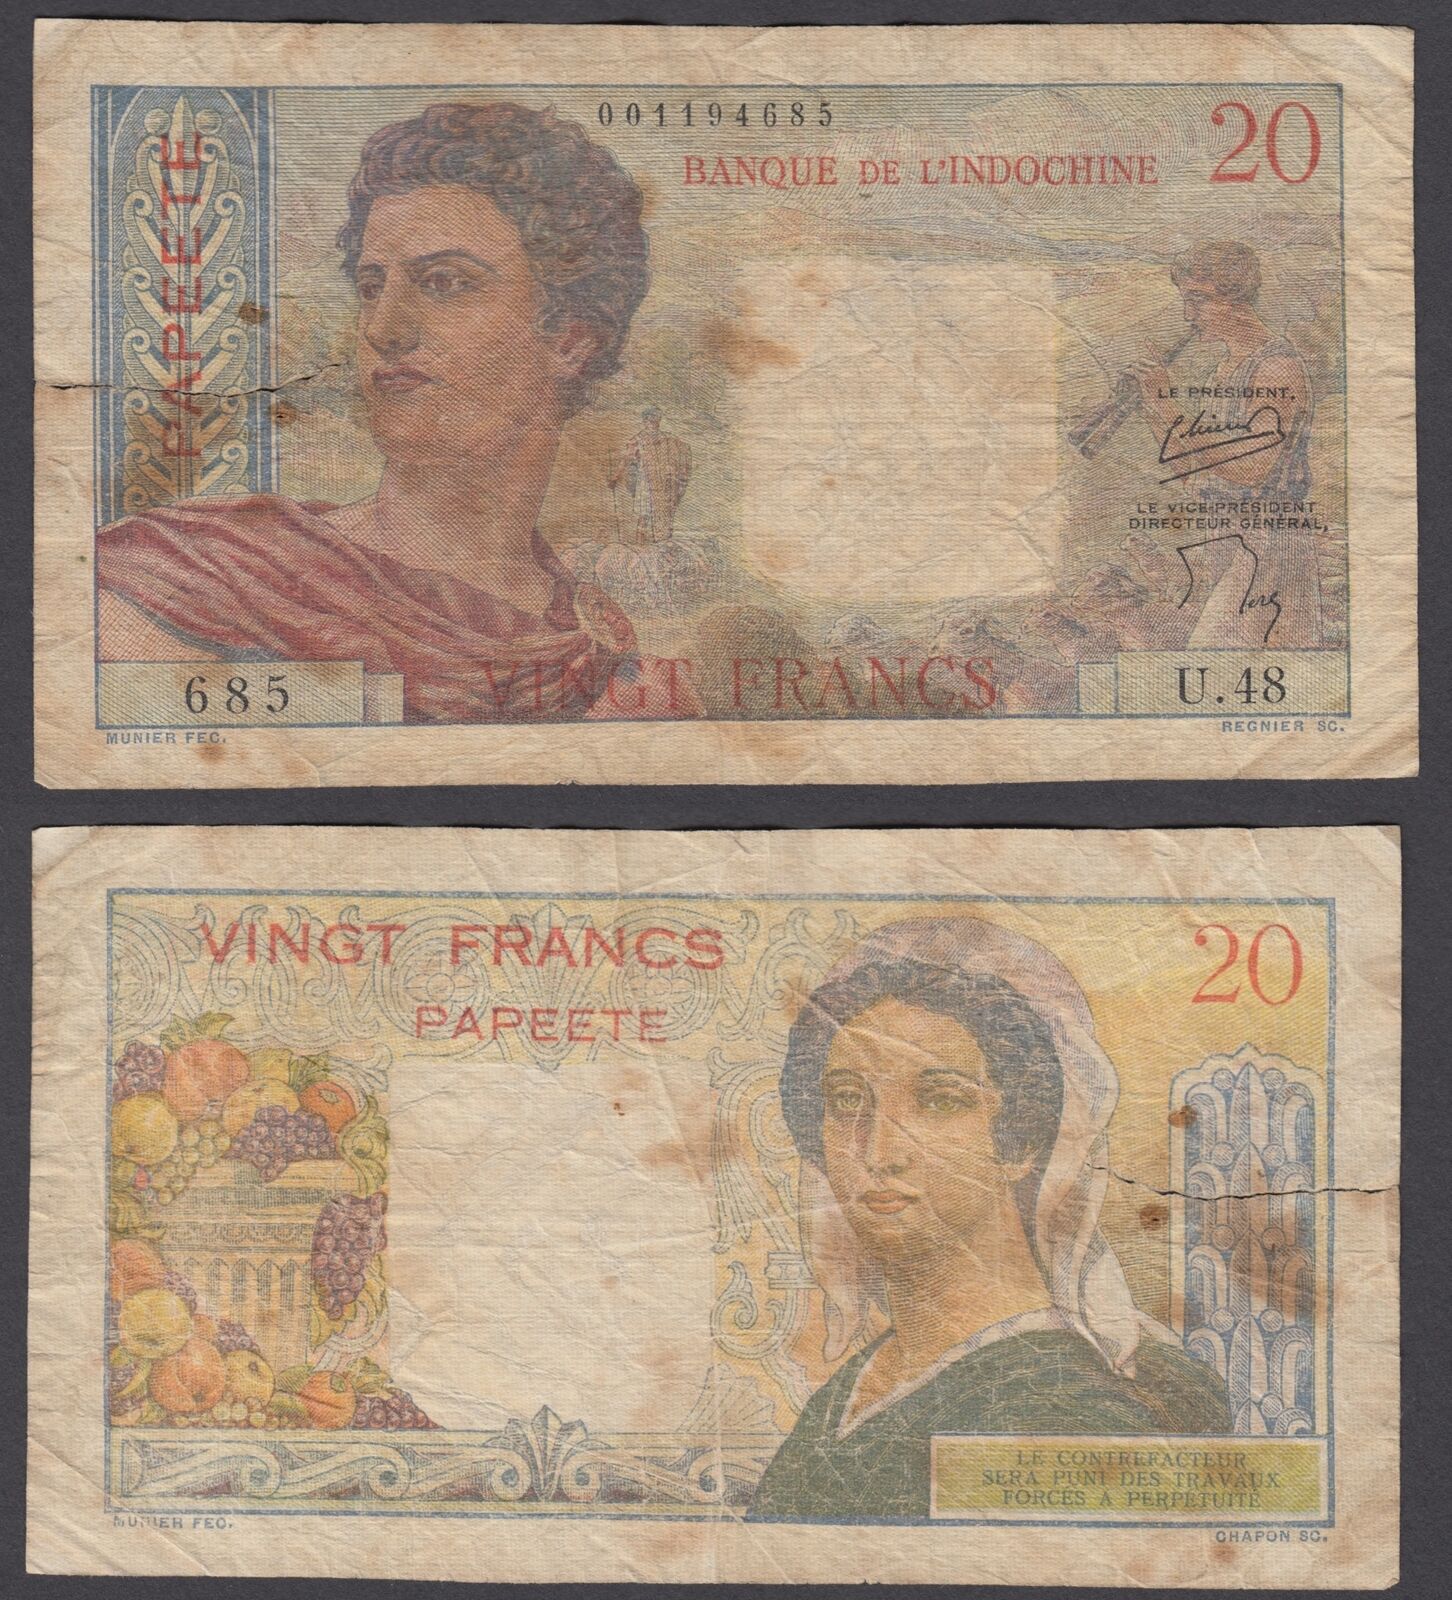 Tahiti 20 Francs 1954-1958 (VG) Condition Banknote Papeete P-21b